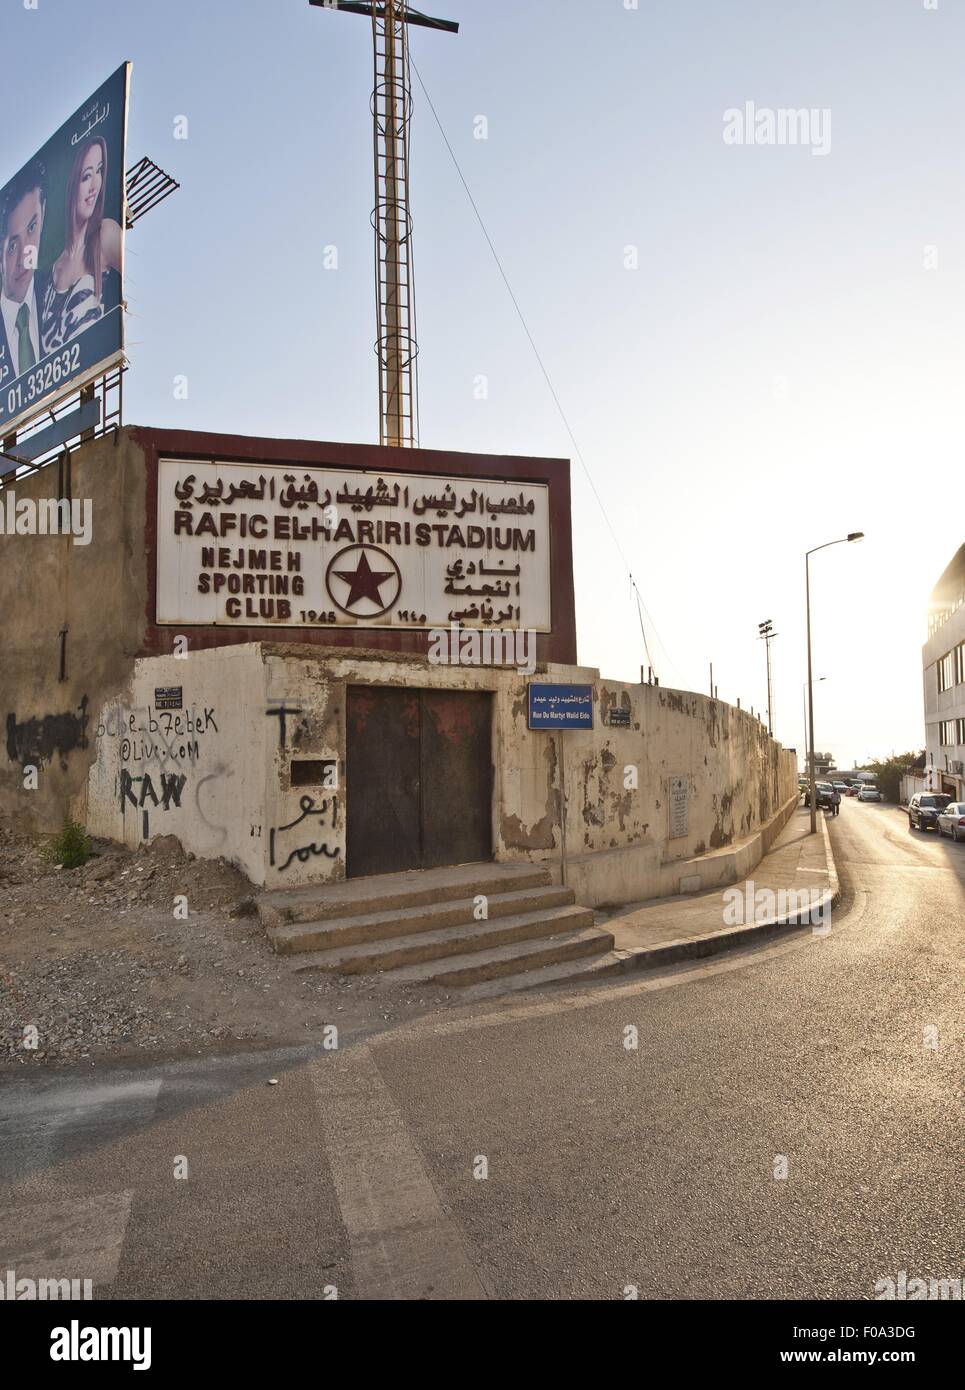 Rafic El-Hariri old stadium and Nejmeh Sporting Club, Beirut, Lebanon Stock Photo